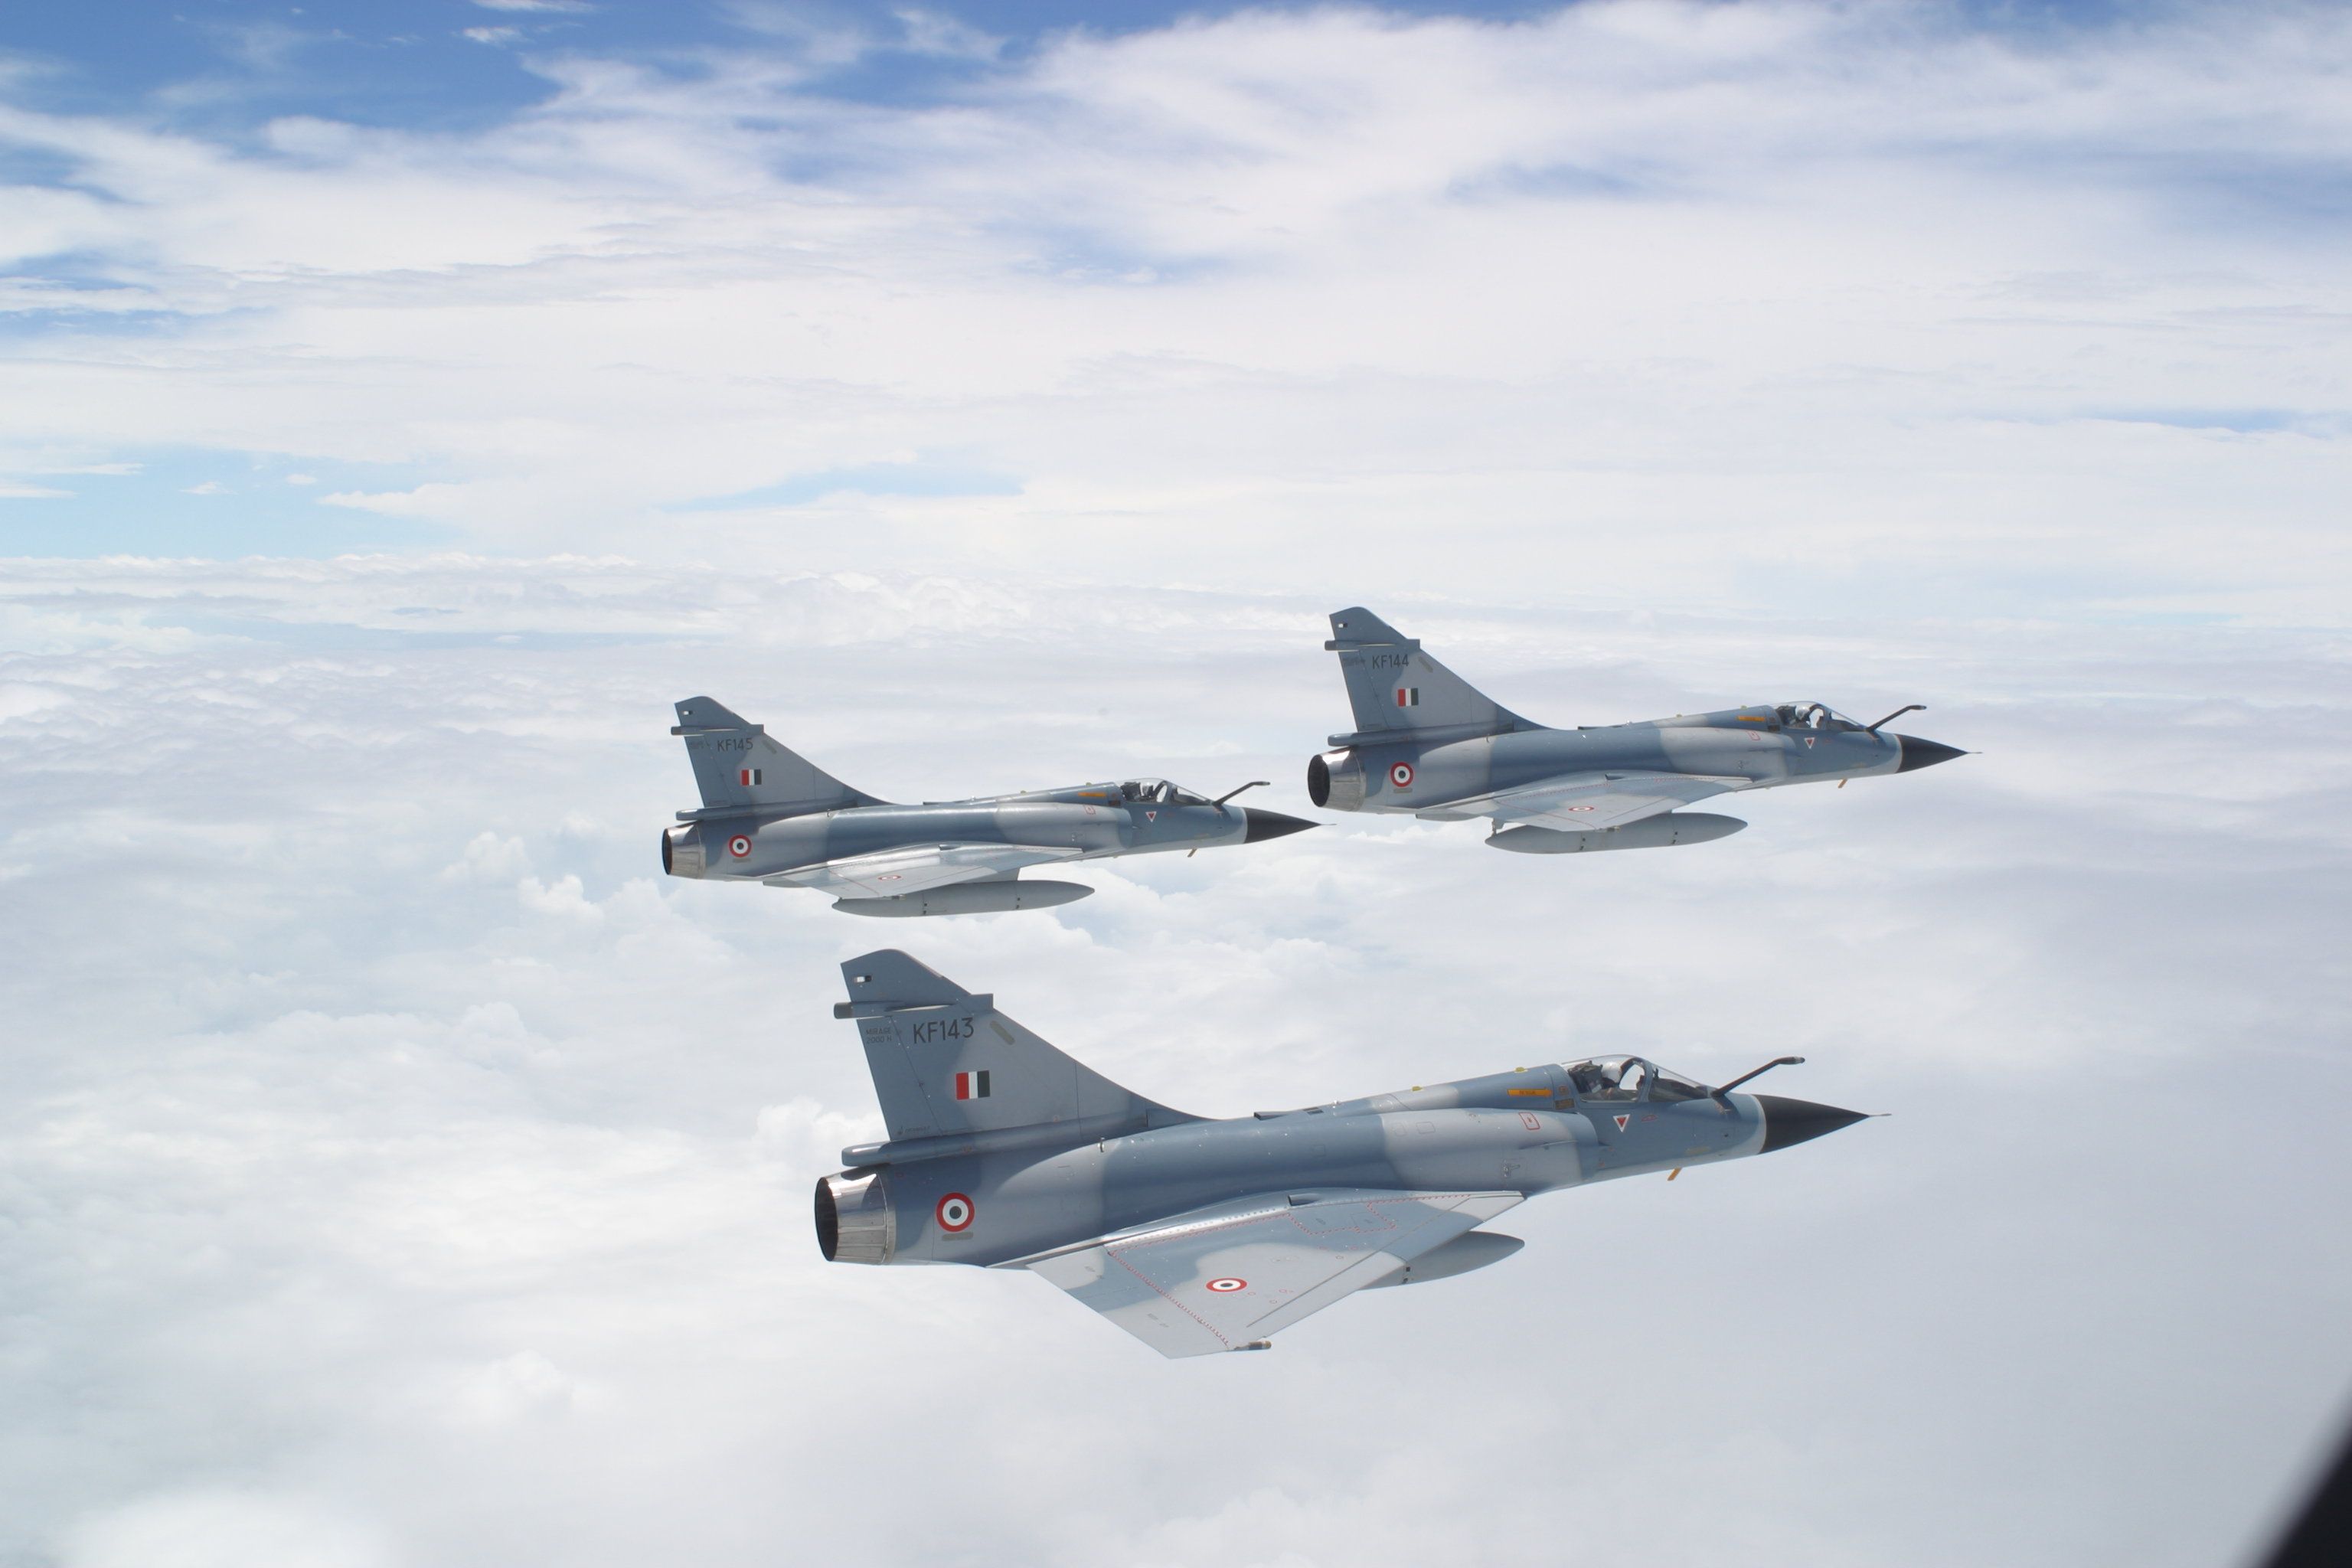 17 Dassault Mirage 2000 HD Wallpapers | Backgrounds - Wallpaper Abyss